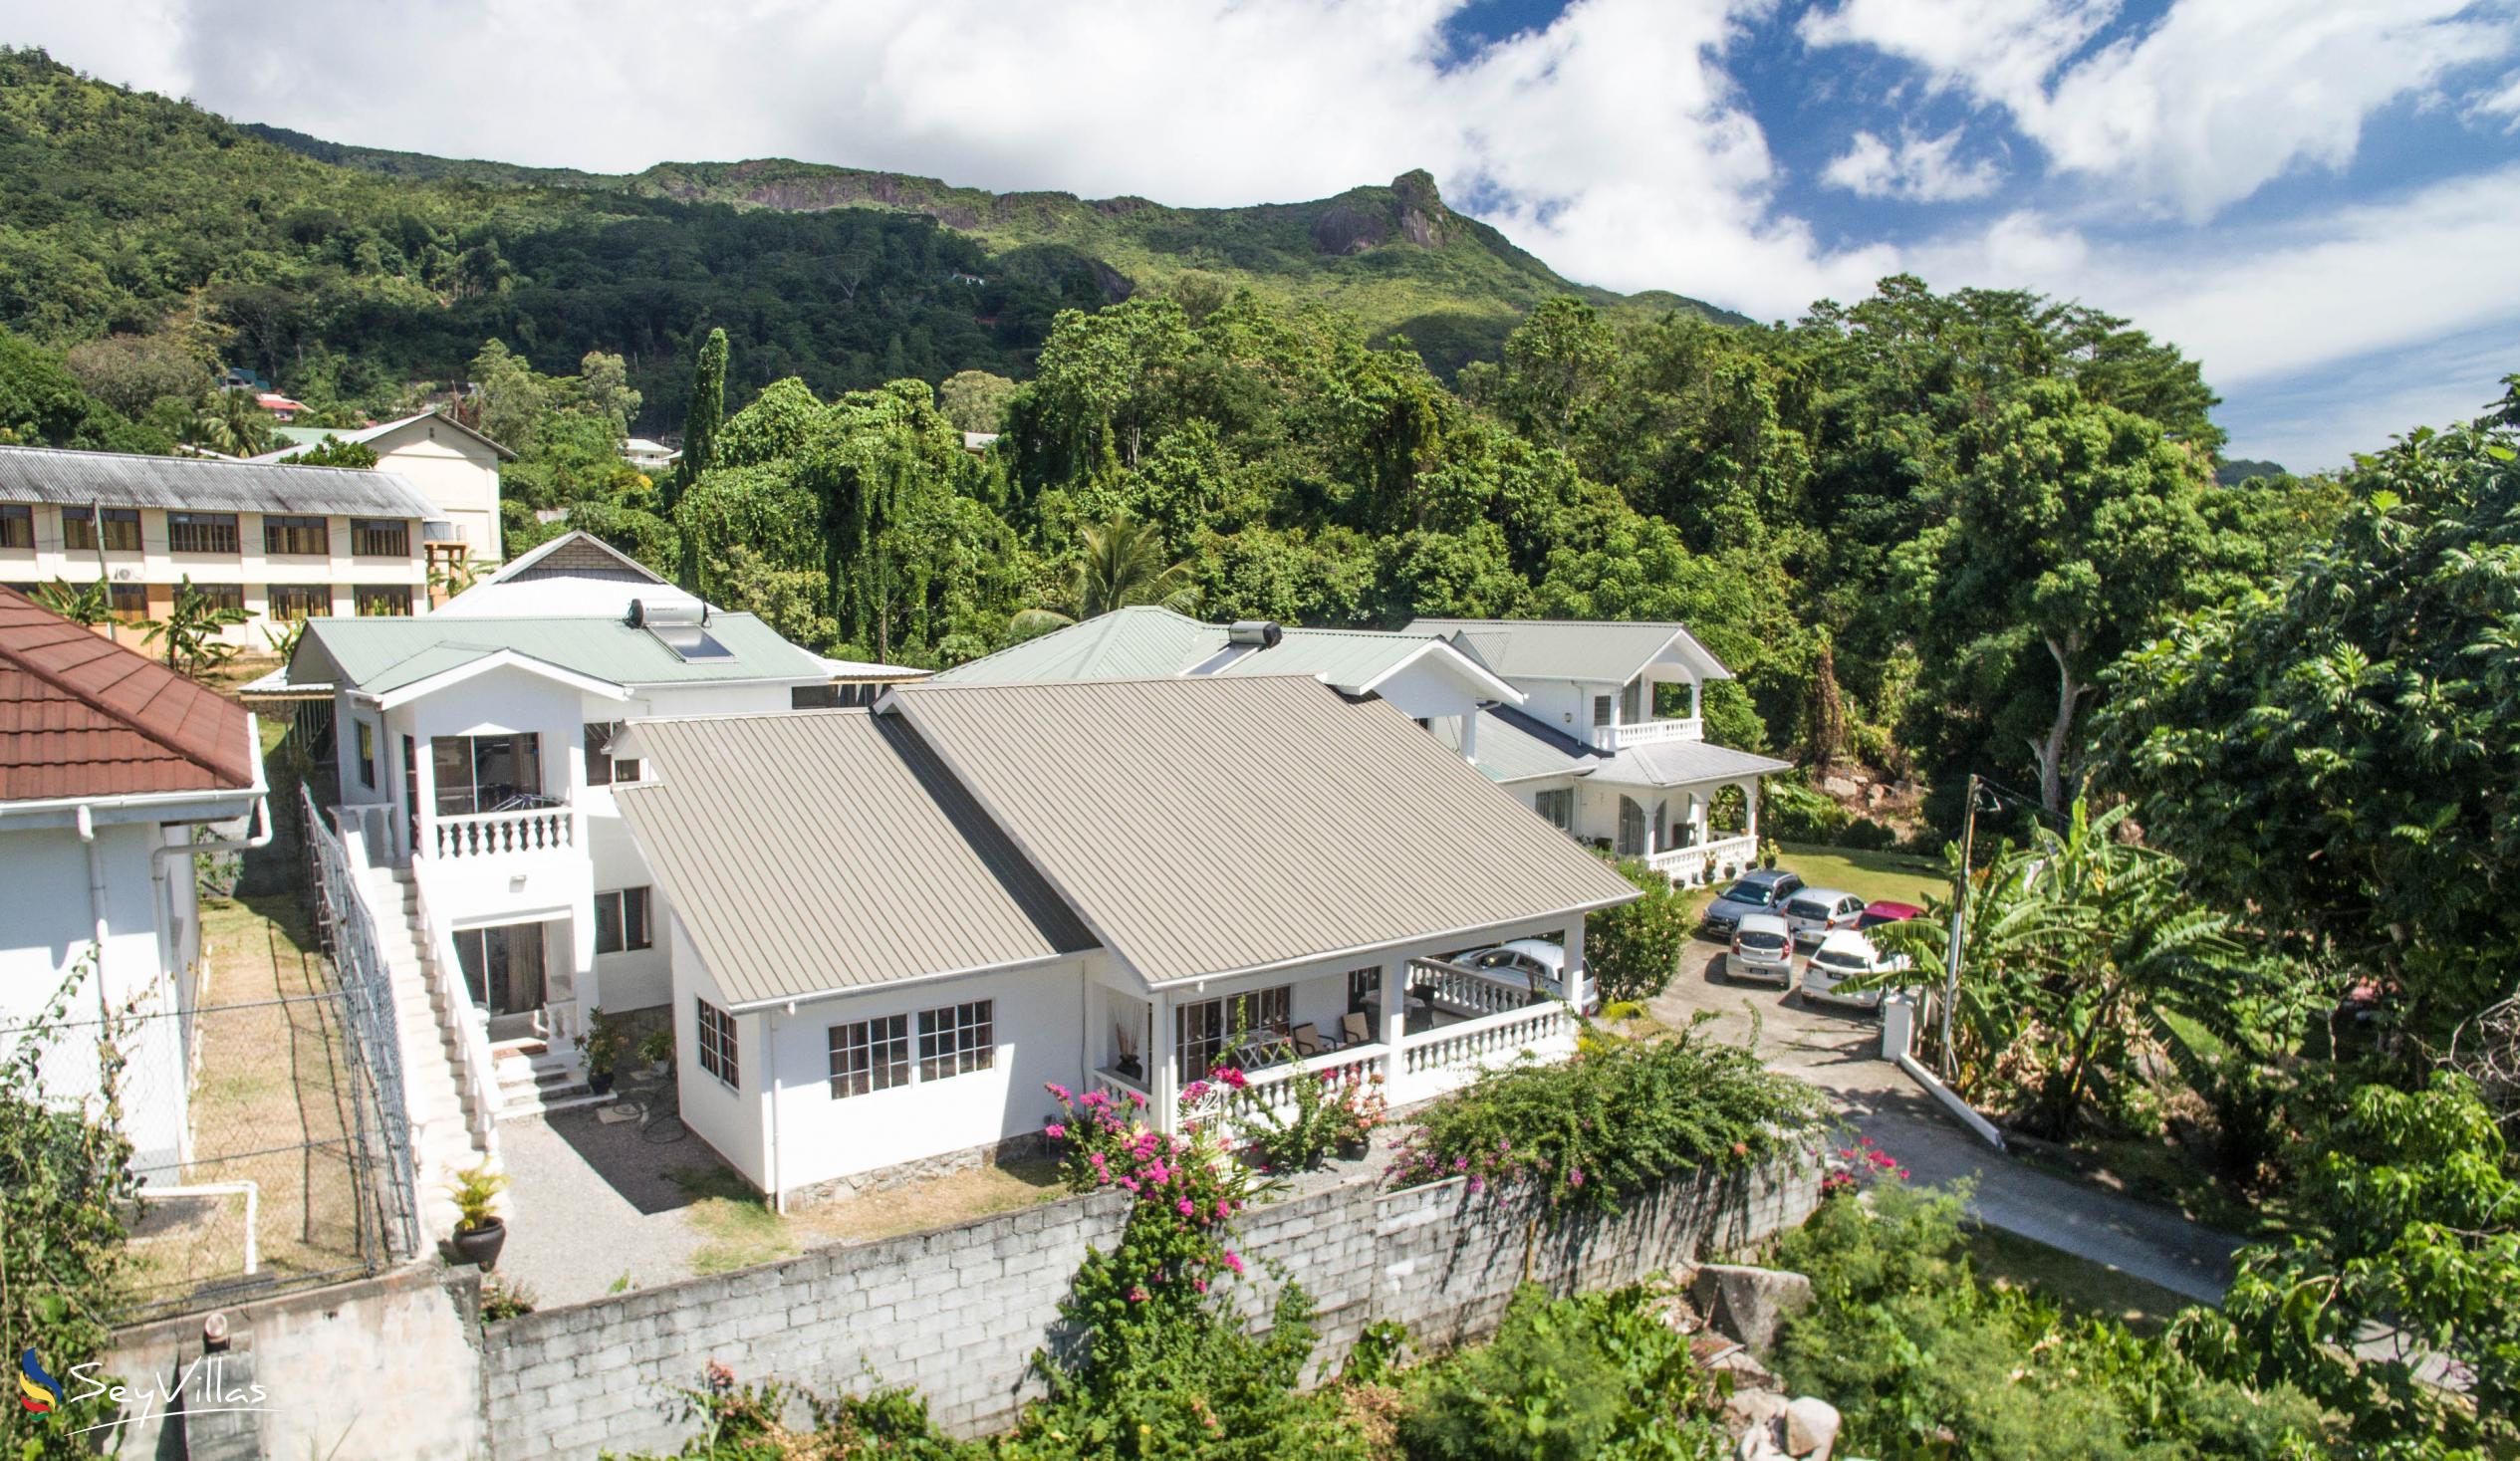 Photo 3: Row's Villa - Outdoor area - Mahé (Seychelles)